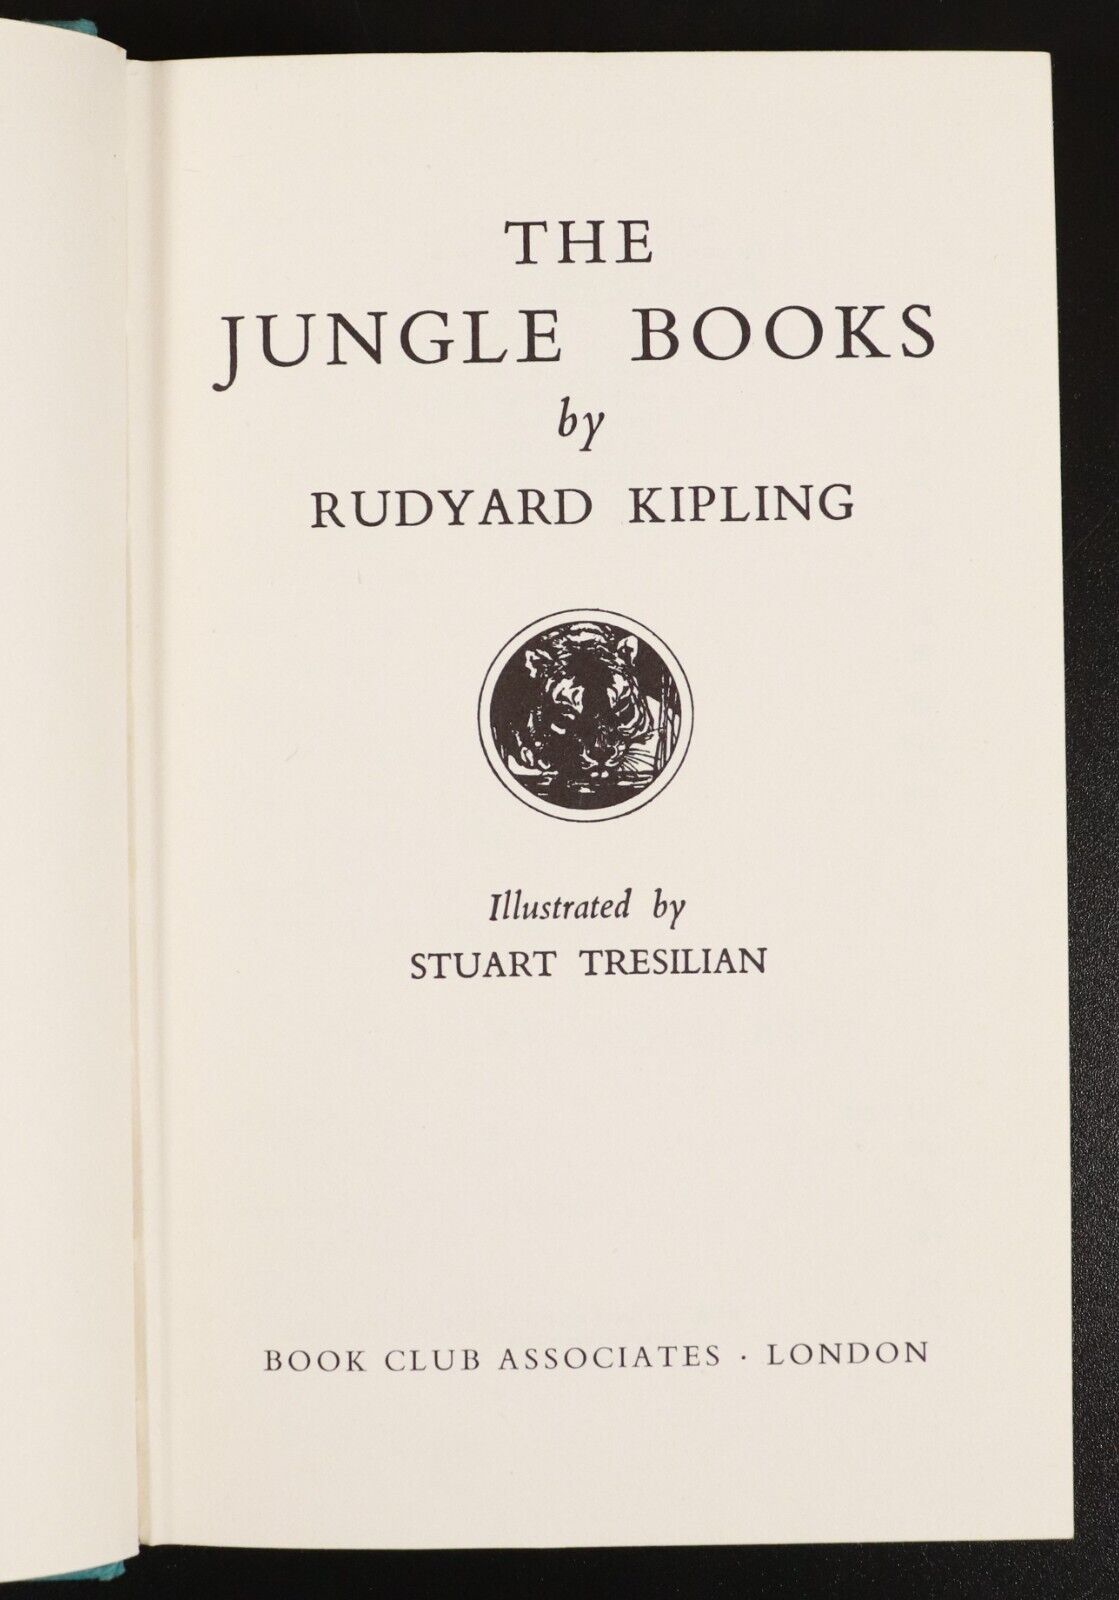 1974 The Jungle Books by Rudyard Kipling Children's Book - Stuart Tresilian - 0